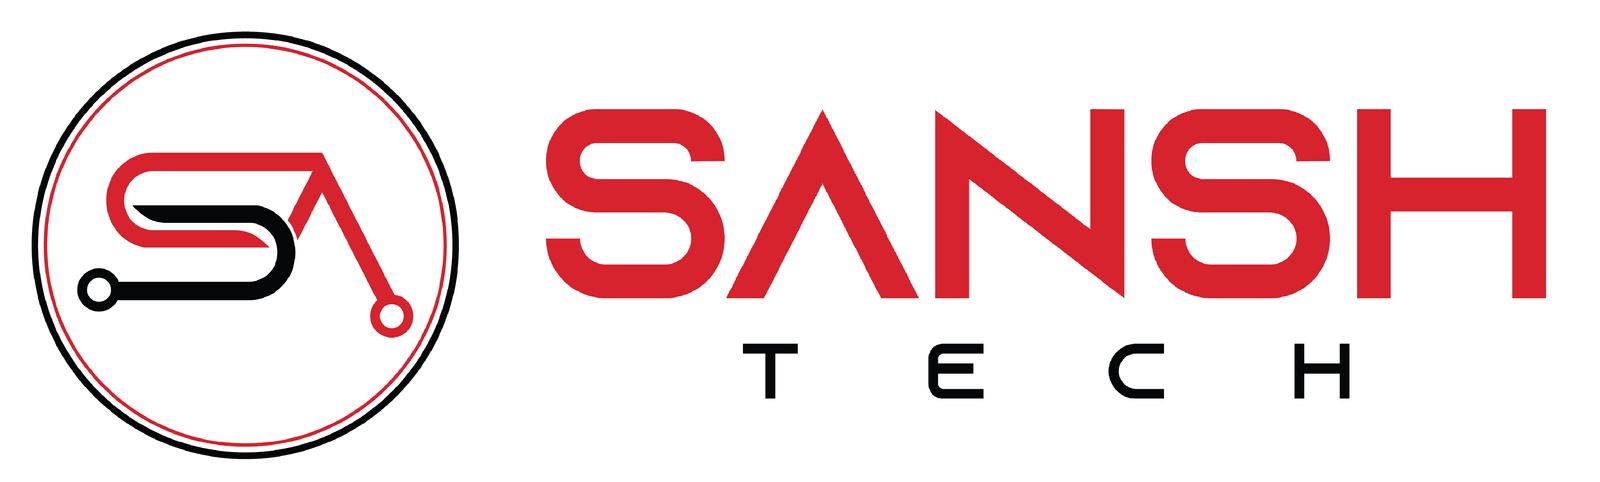 SanshTech